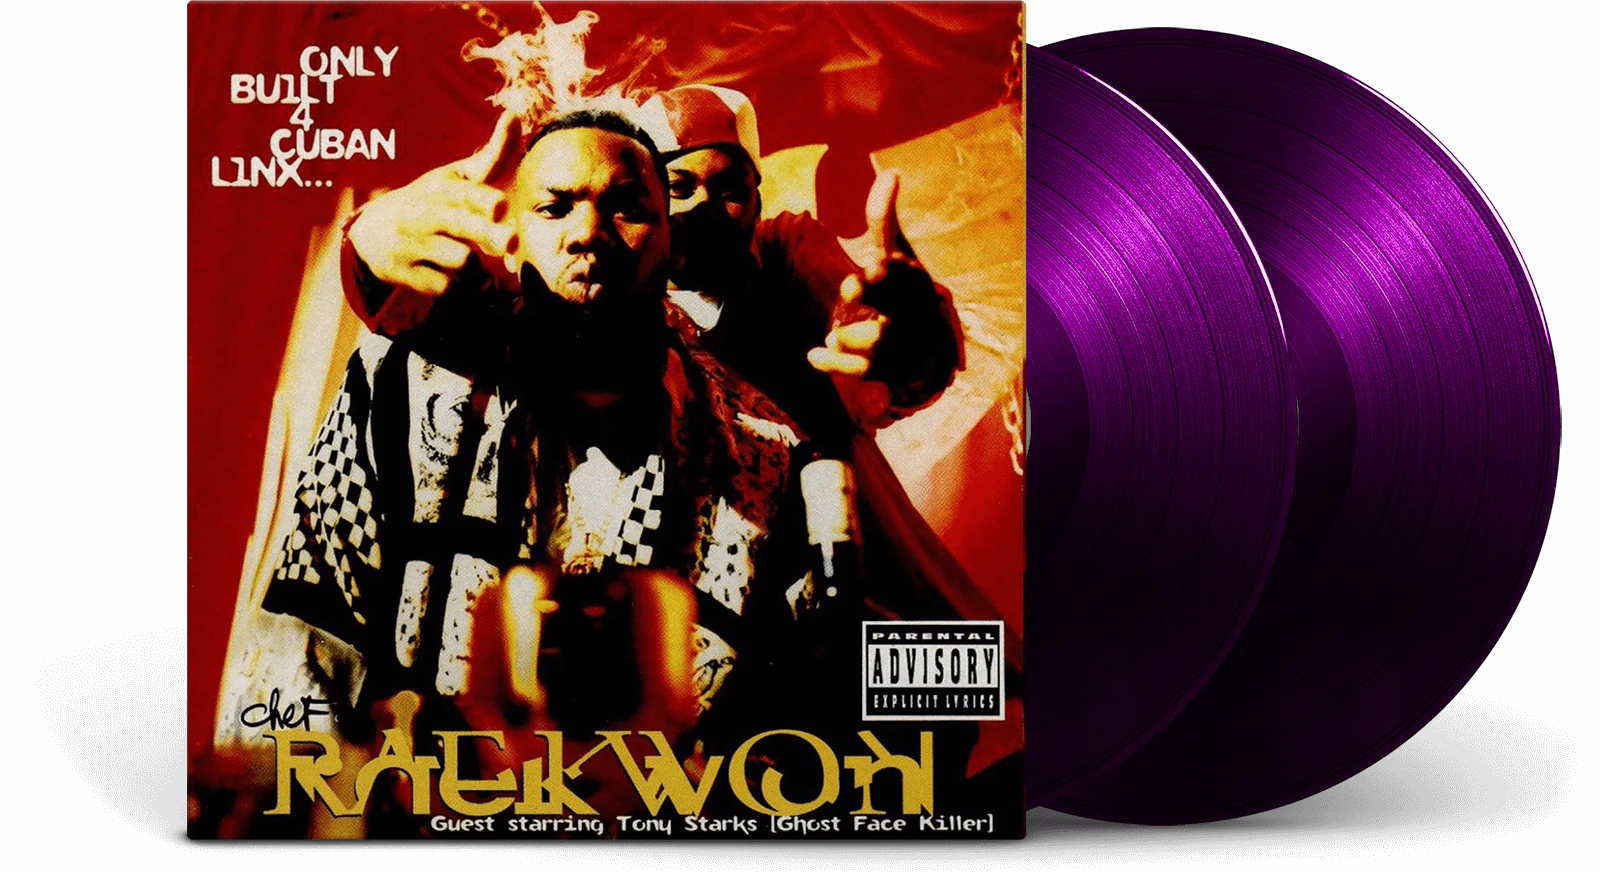 Chef Raekwon – Only Built 4 Cuban Linx... 2LP (Limited Edition Purple Vinyl)